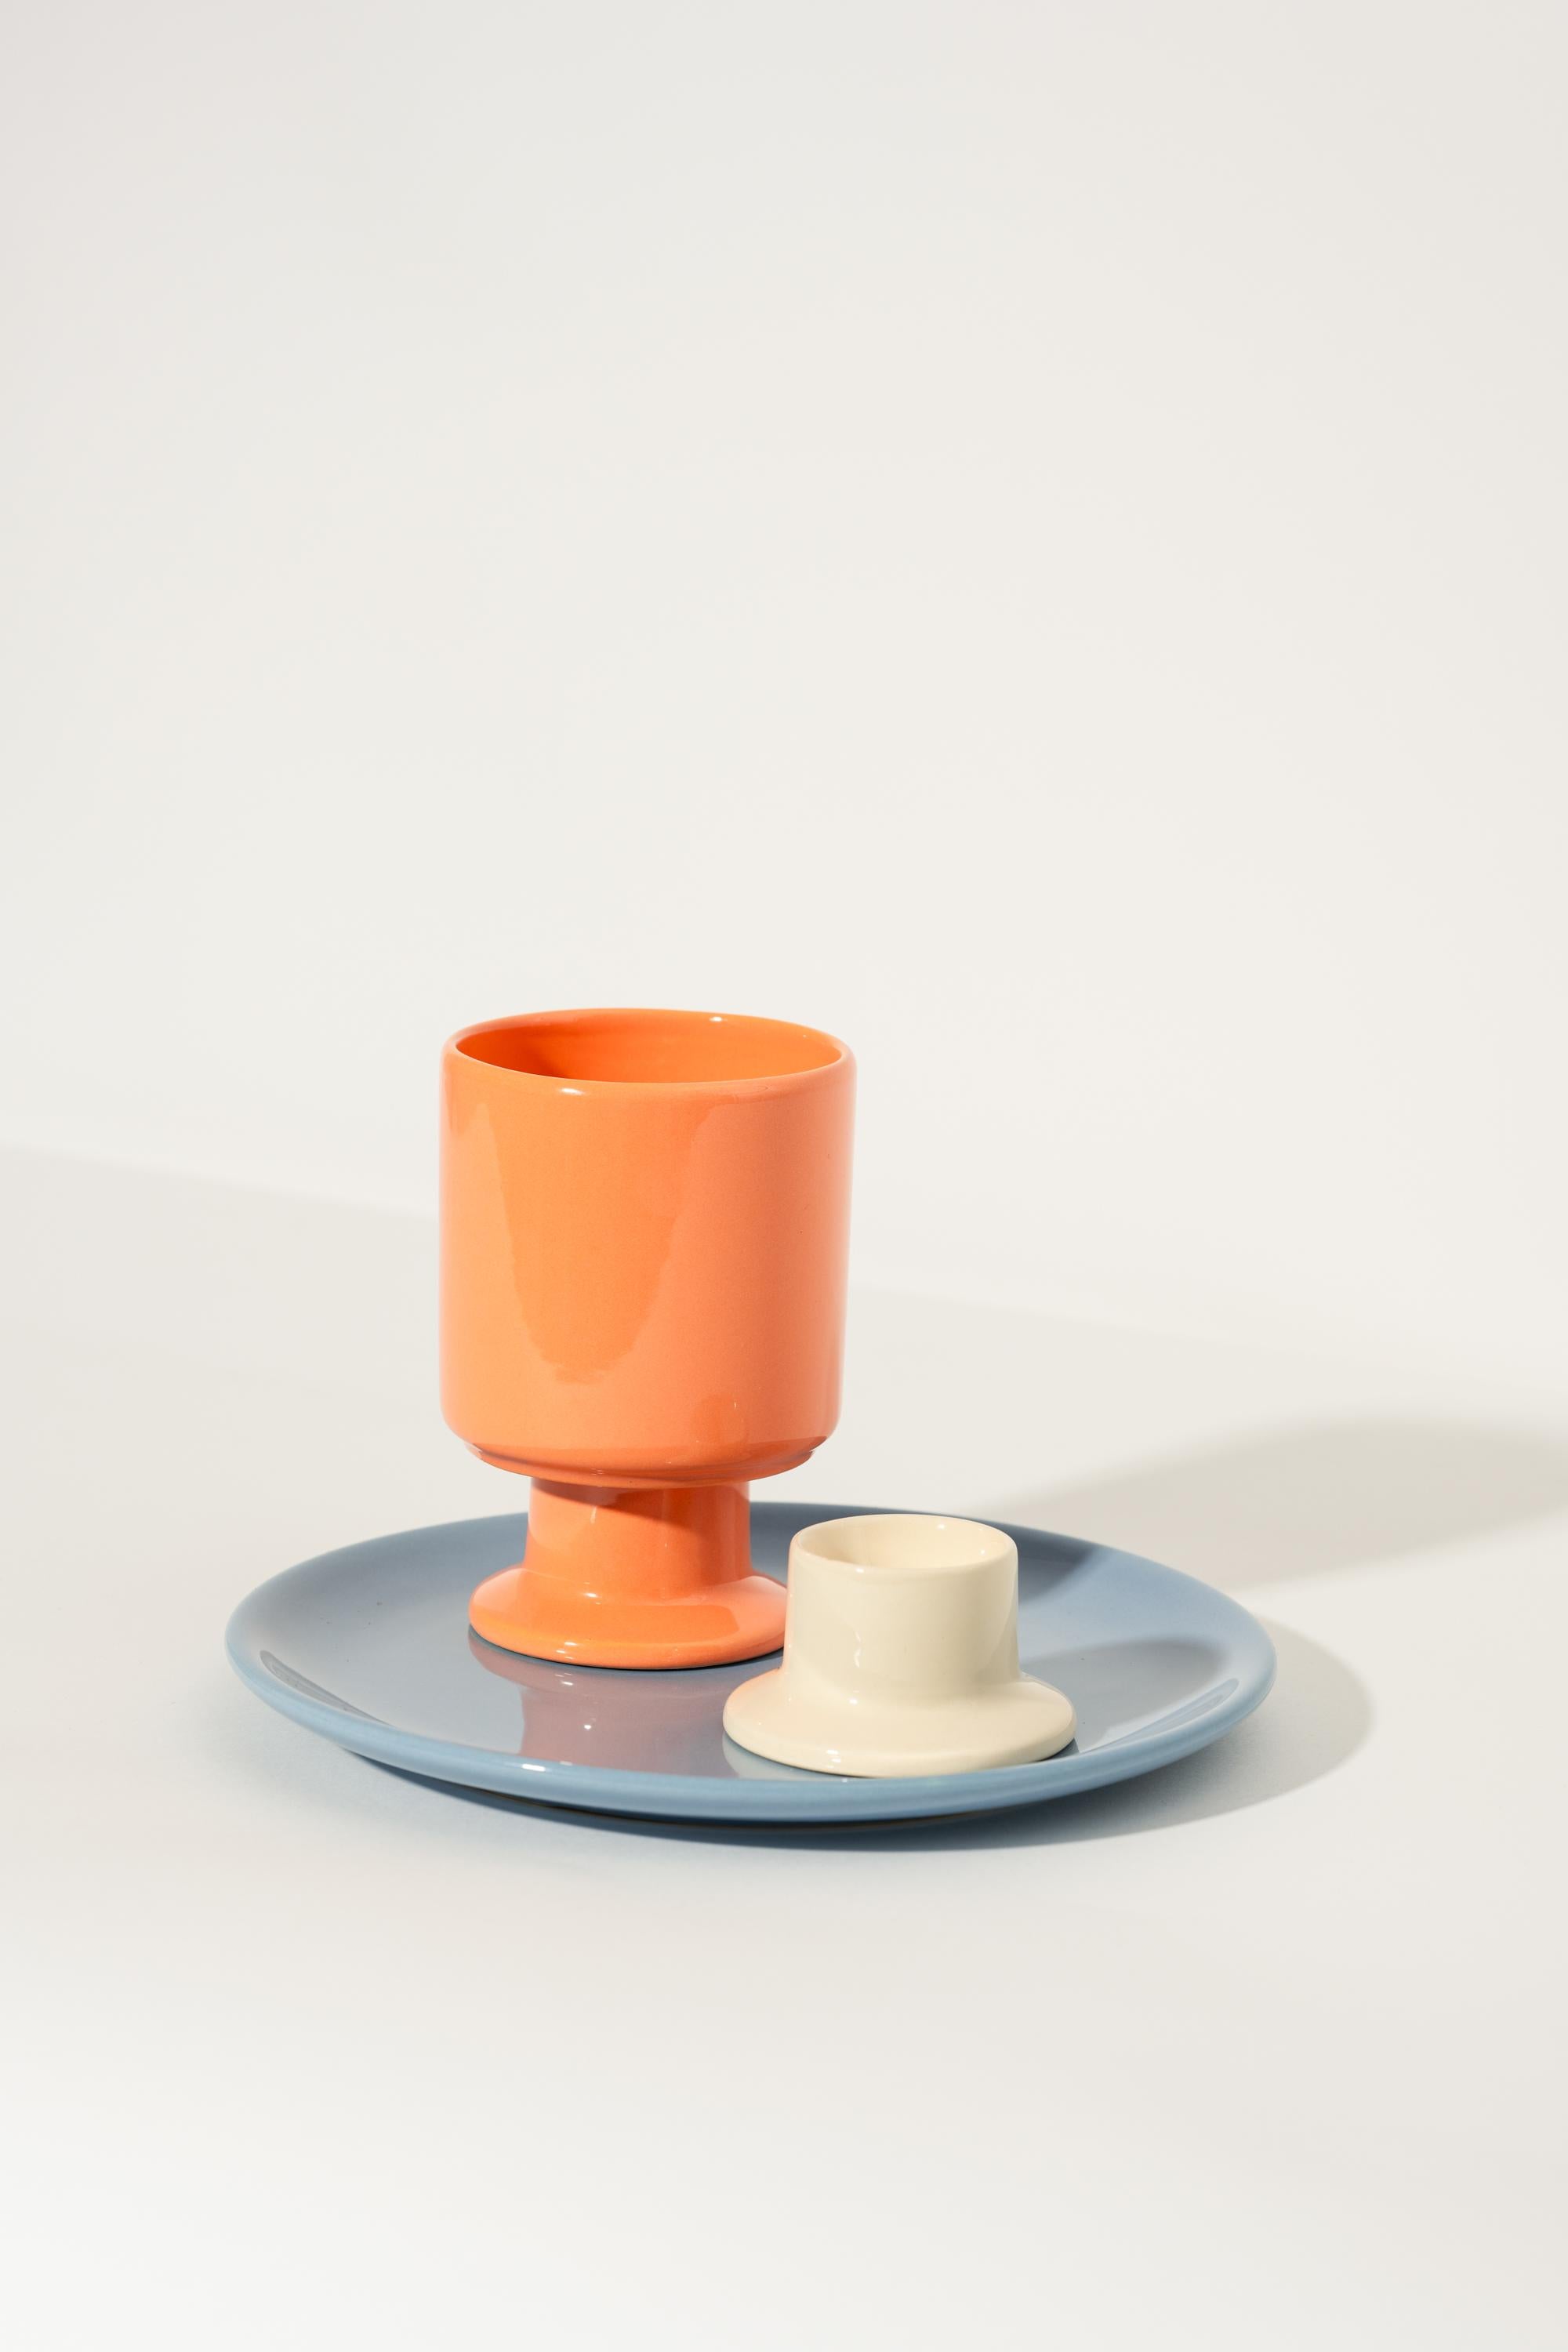 Glazed Breakfast set II / plate, mug and egg holder by Malwina Konopacka For Sale